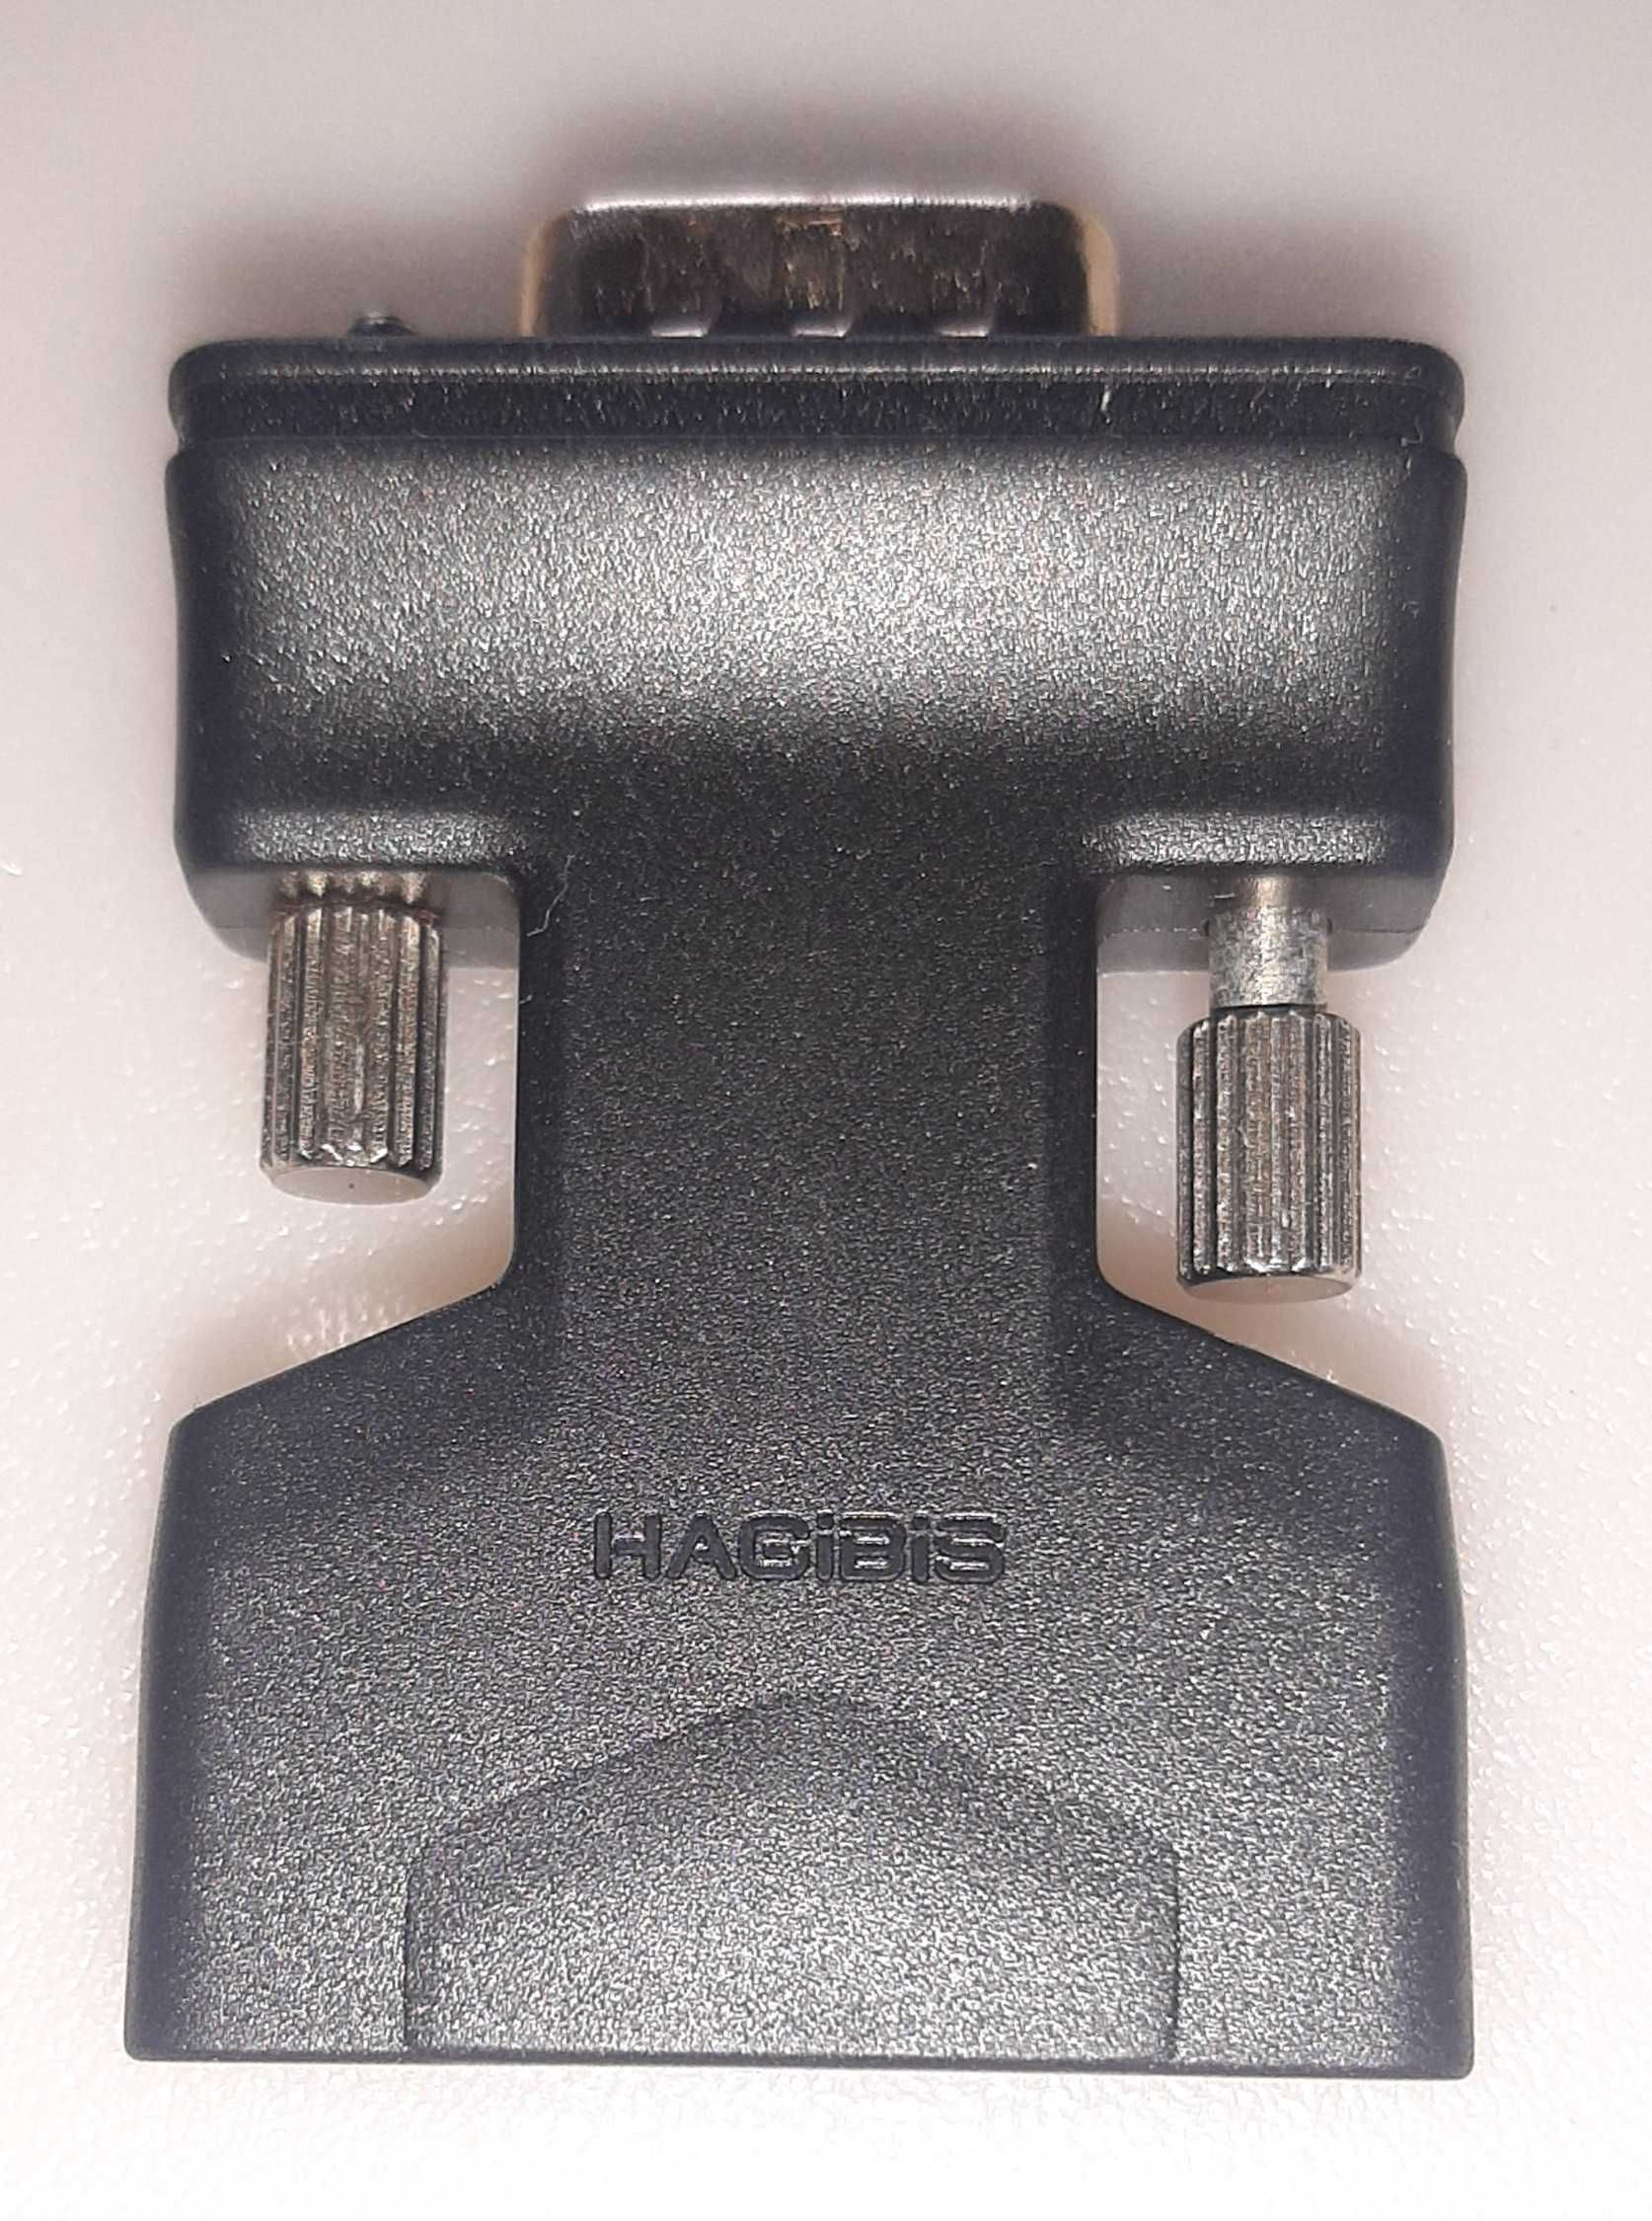 HAGIBIS HVC03 hdmi to vga adapter